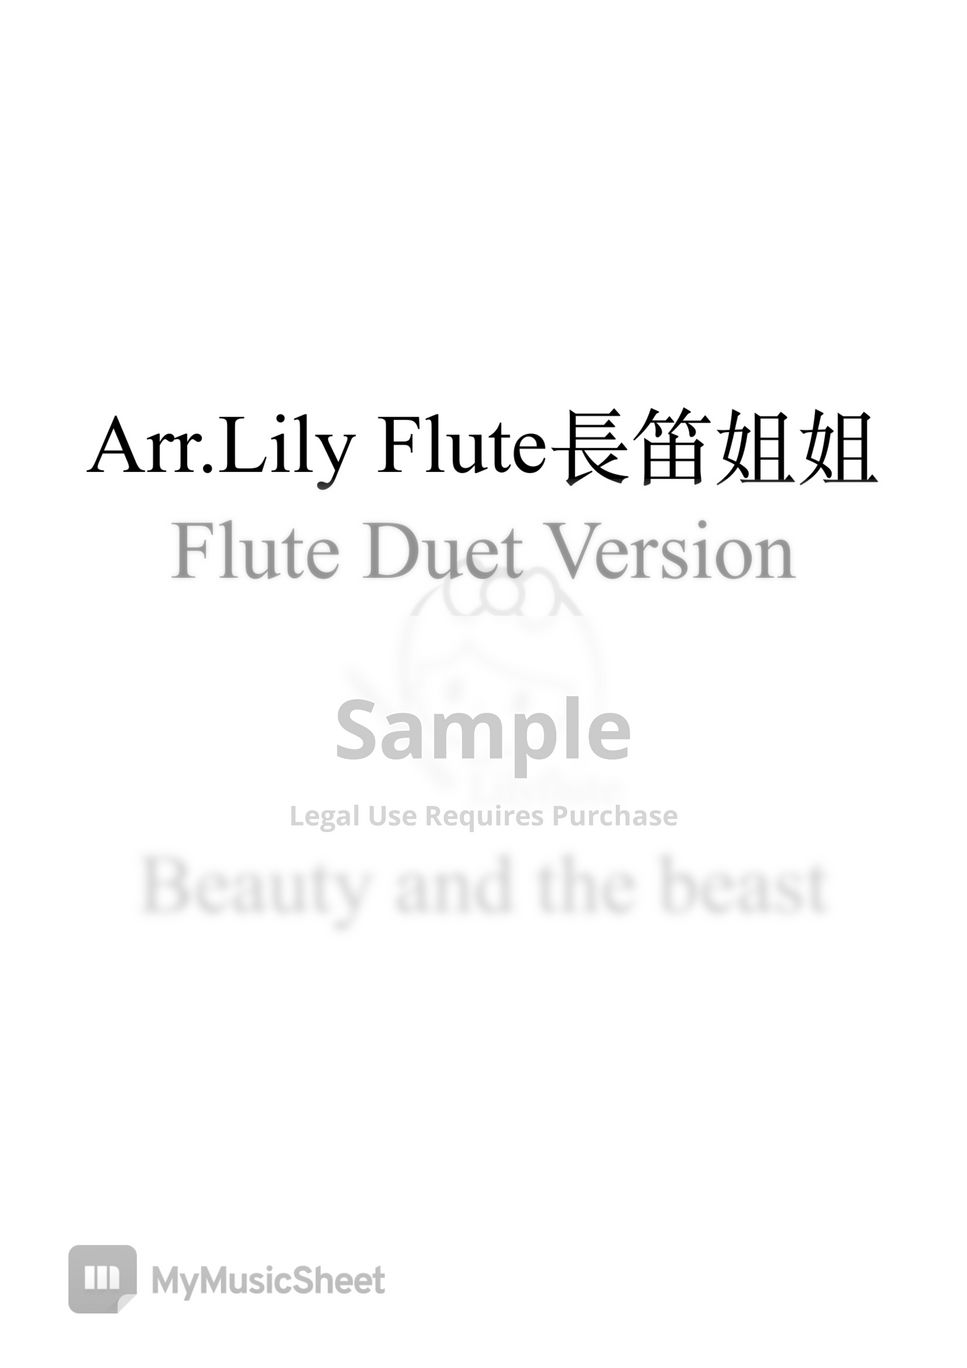 美女與野獸 - Beauty and the Beast Duet Version (附贈伴奏在YT) by Lily Flute 長笛姐姐